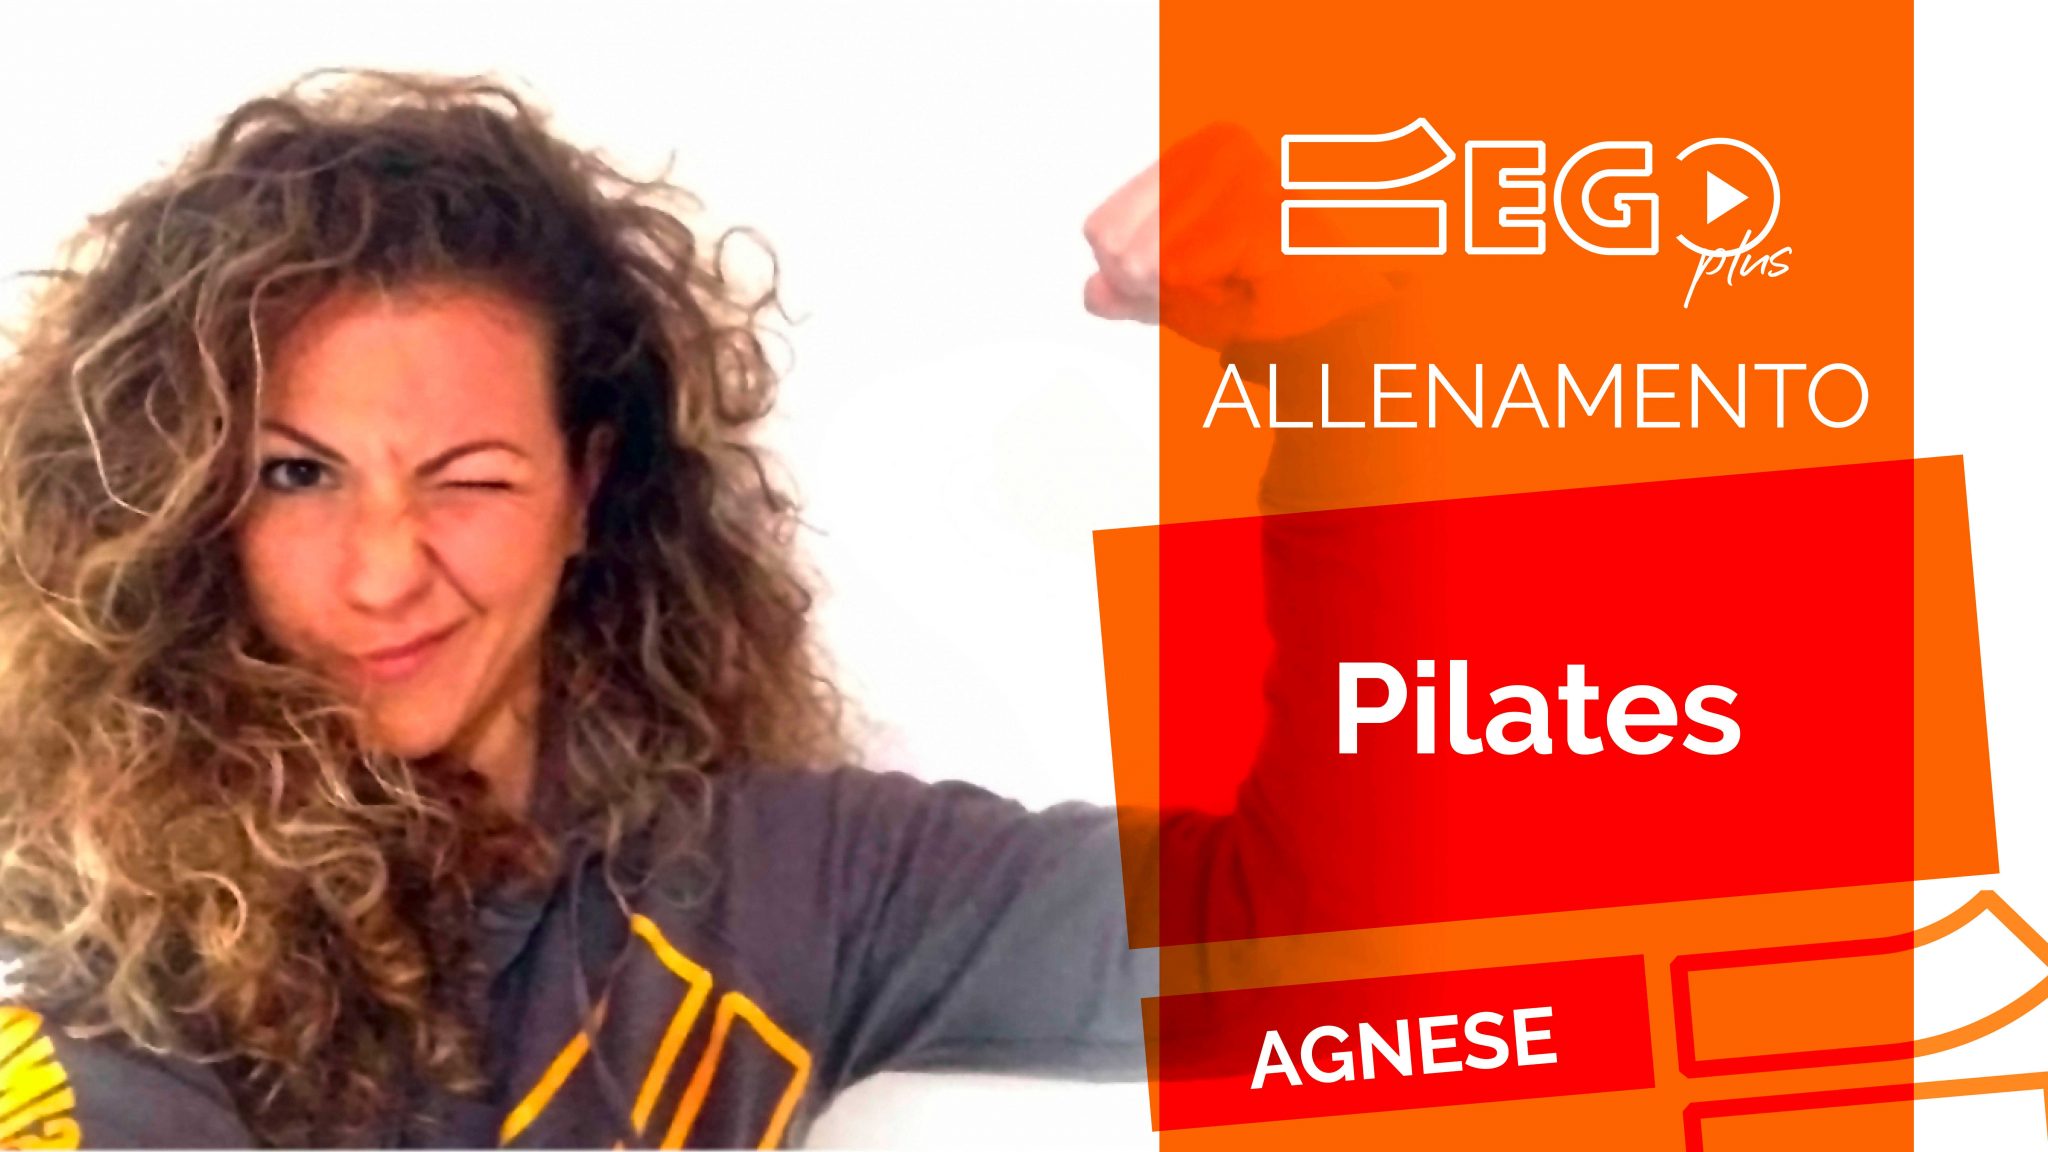 Agnese-Pilates-EgoPlus